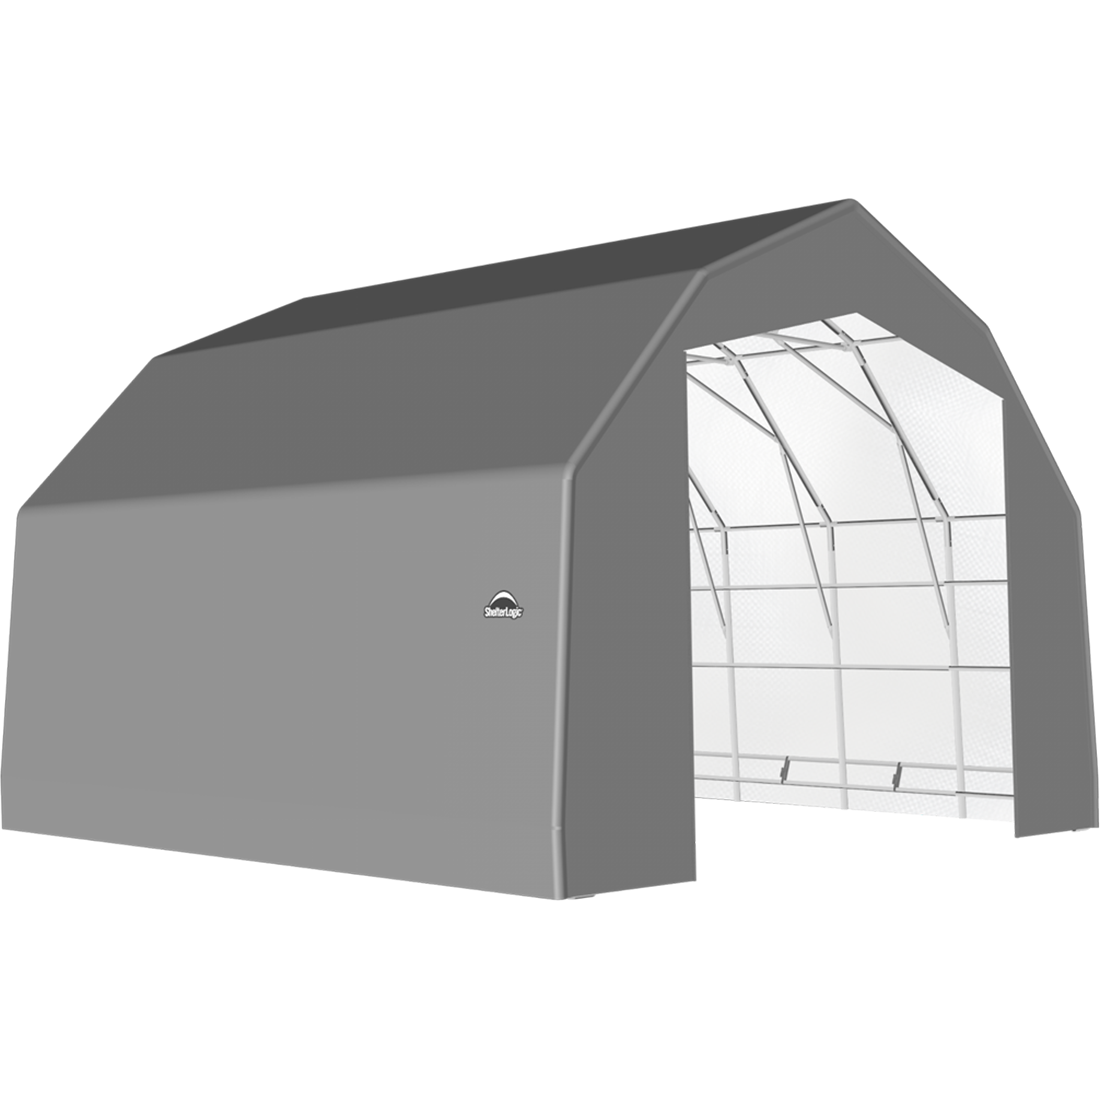 ShelterTech SP Series Barn Shelter, 25 ft. x 24 ft. x 17 ft. Heavy Duty PVC 14.5 oz. Gray